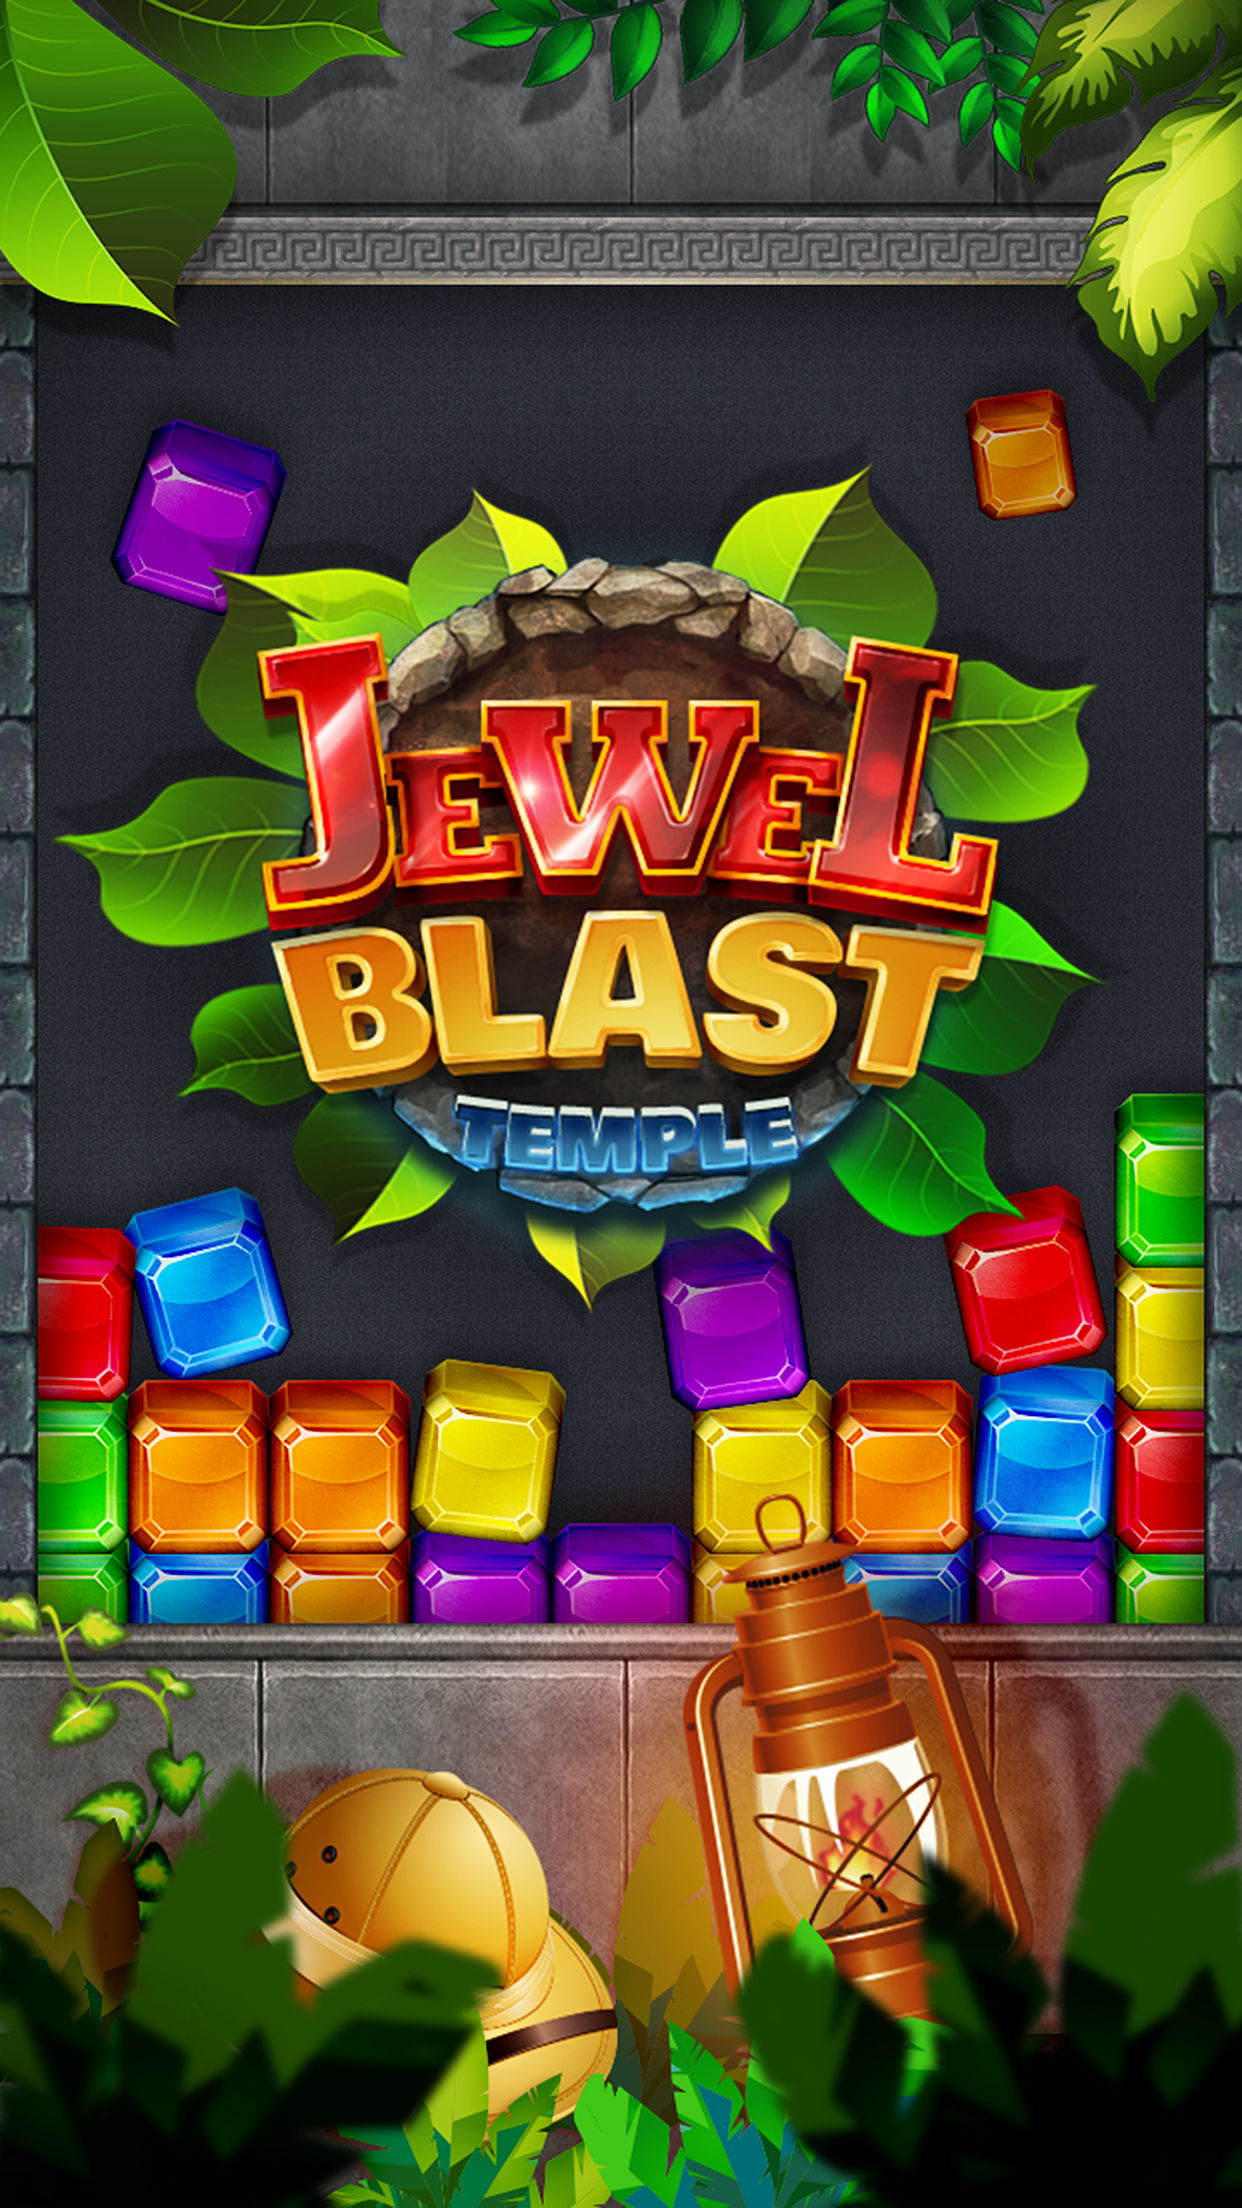 Jewel Blast : Temple